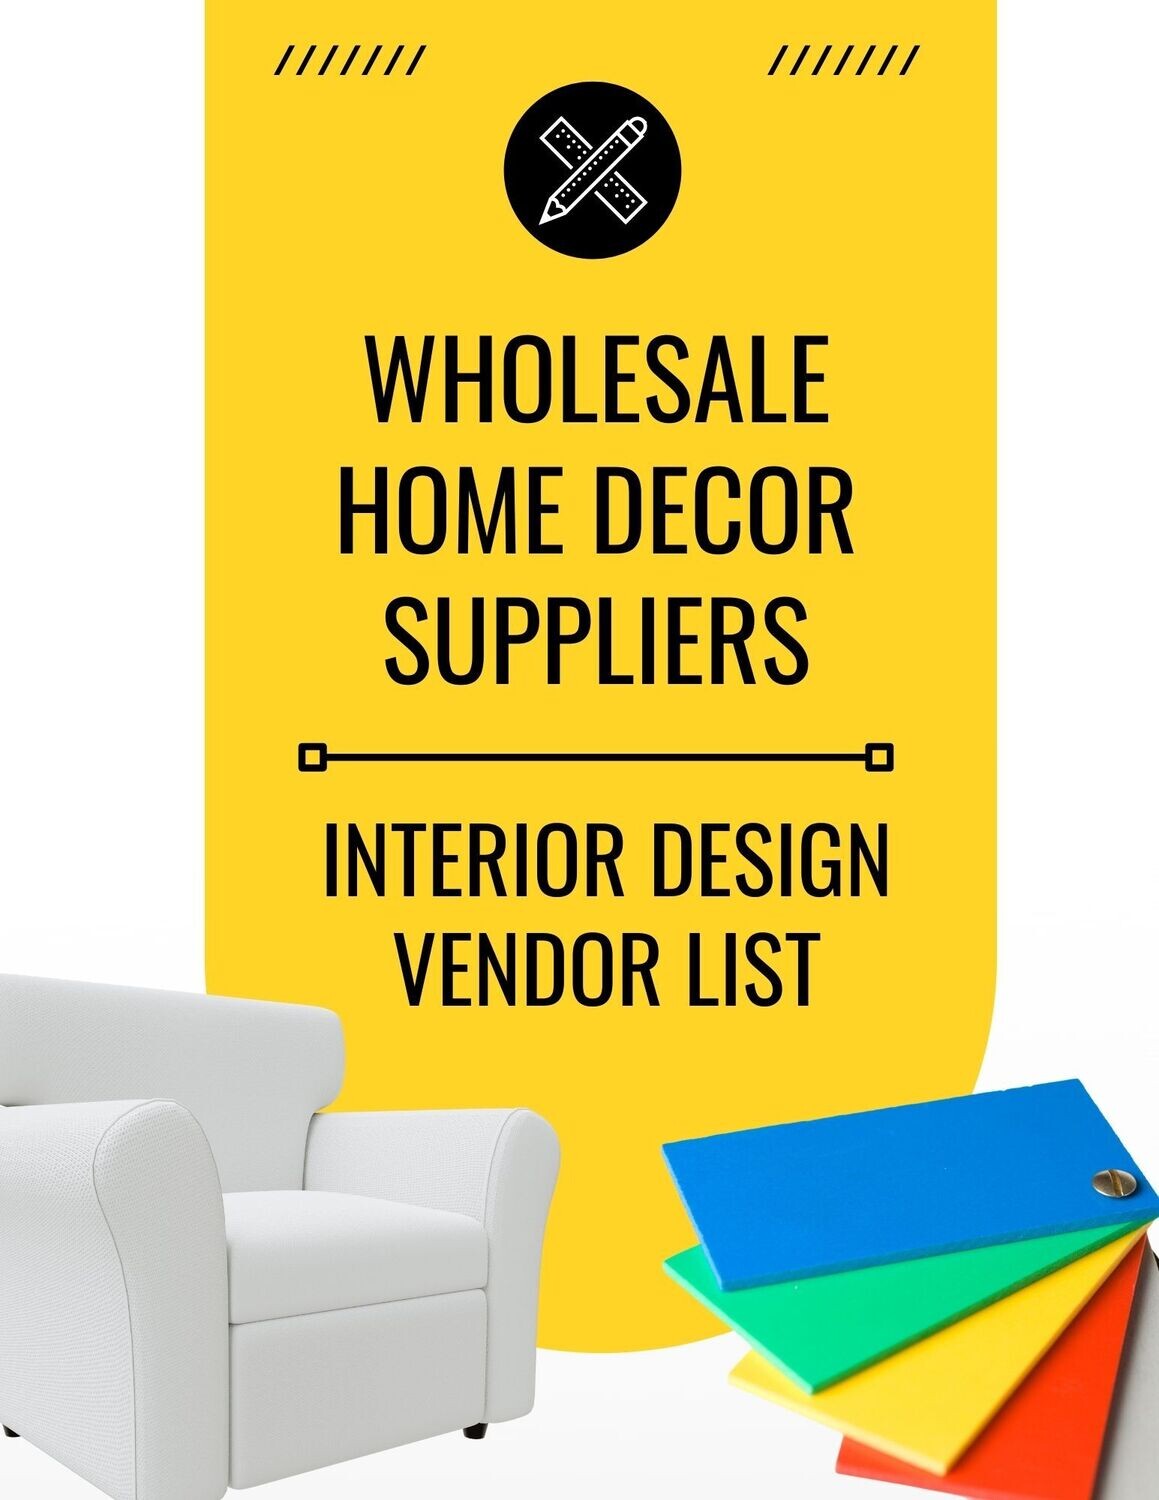 Wholesale Home Decor Suppliers - Interior Design Vendor List